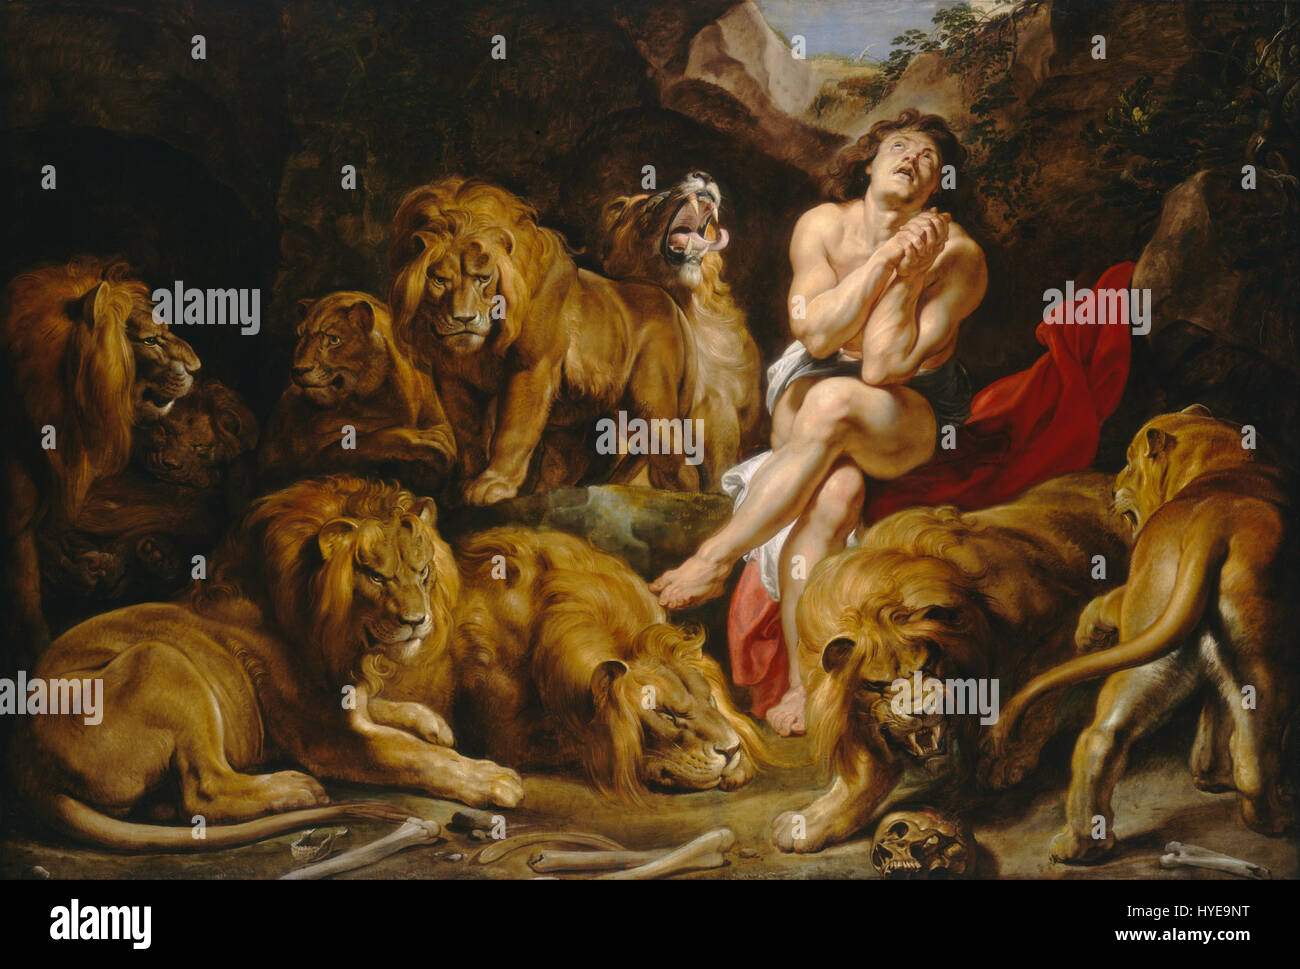 Sir Peter Paul Rubens   Daniel in the Lions' Den   Google Art Project Stock Photo